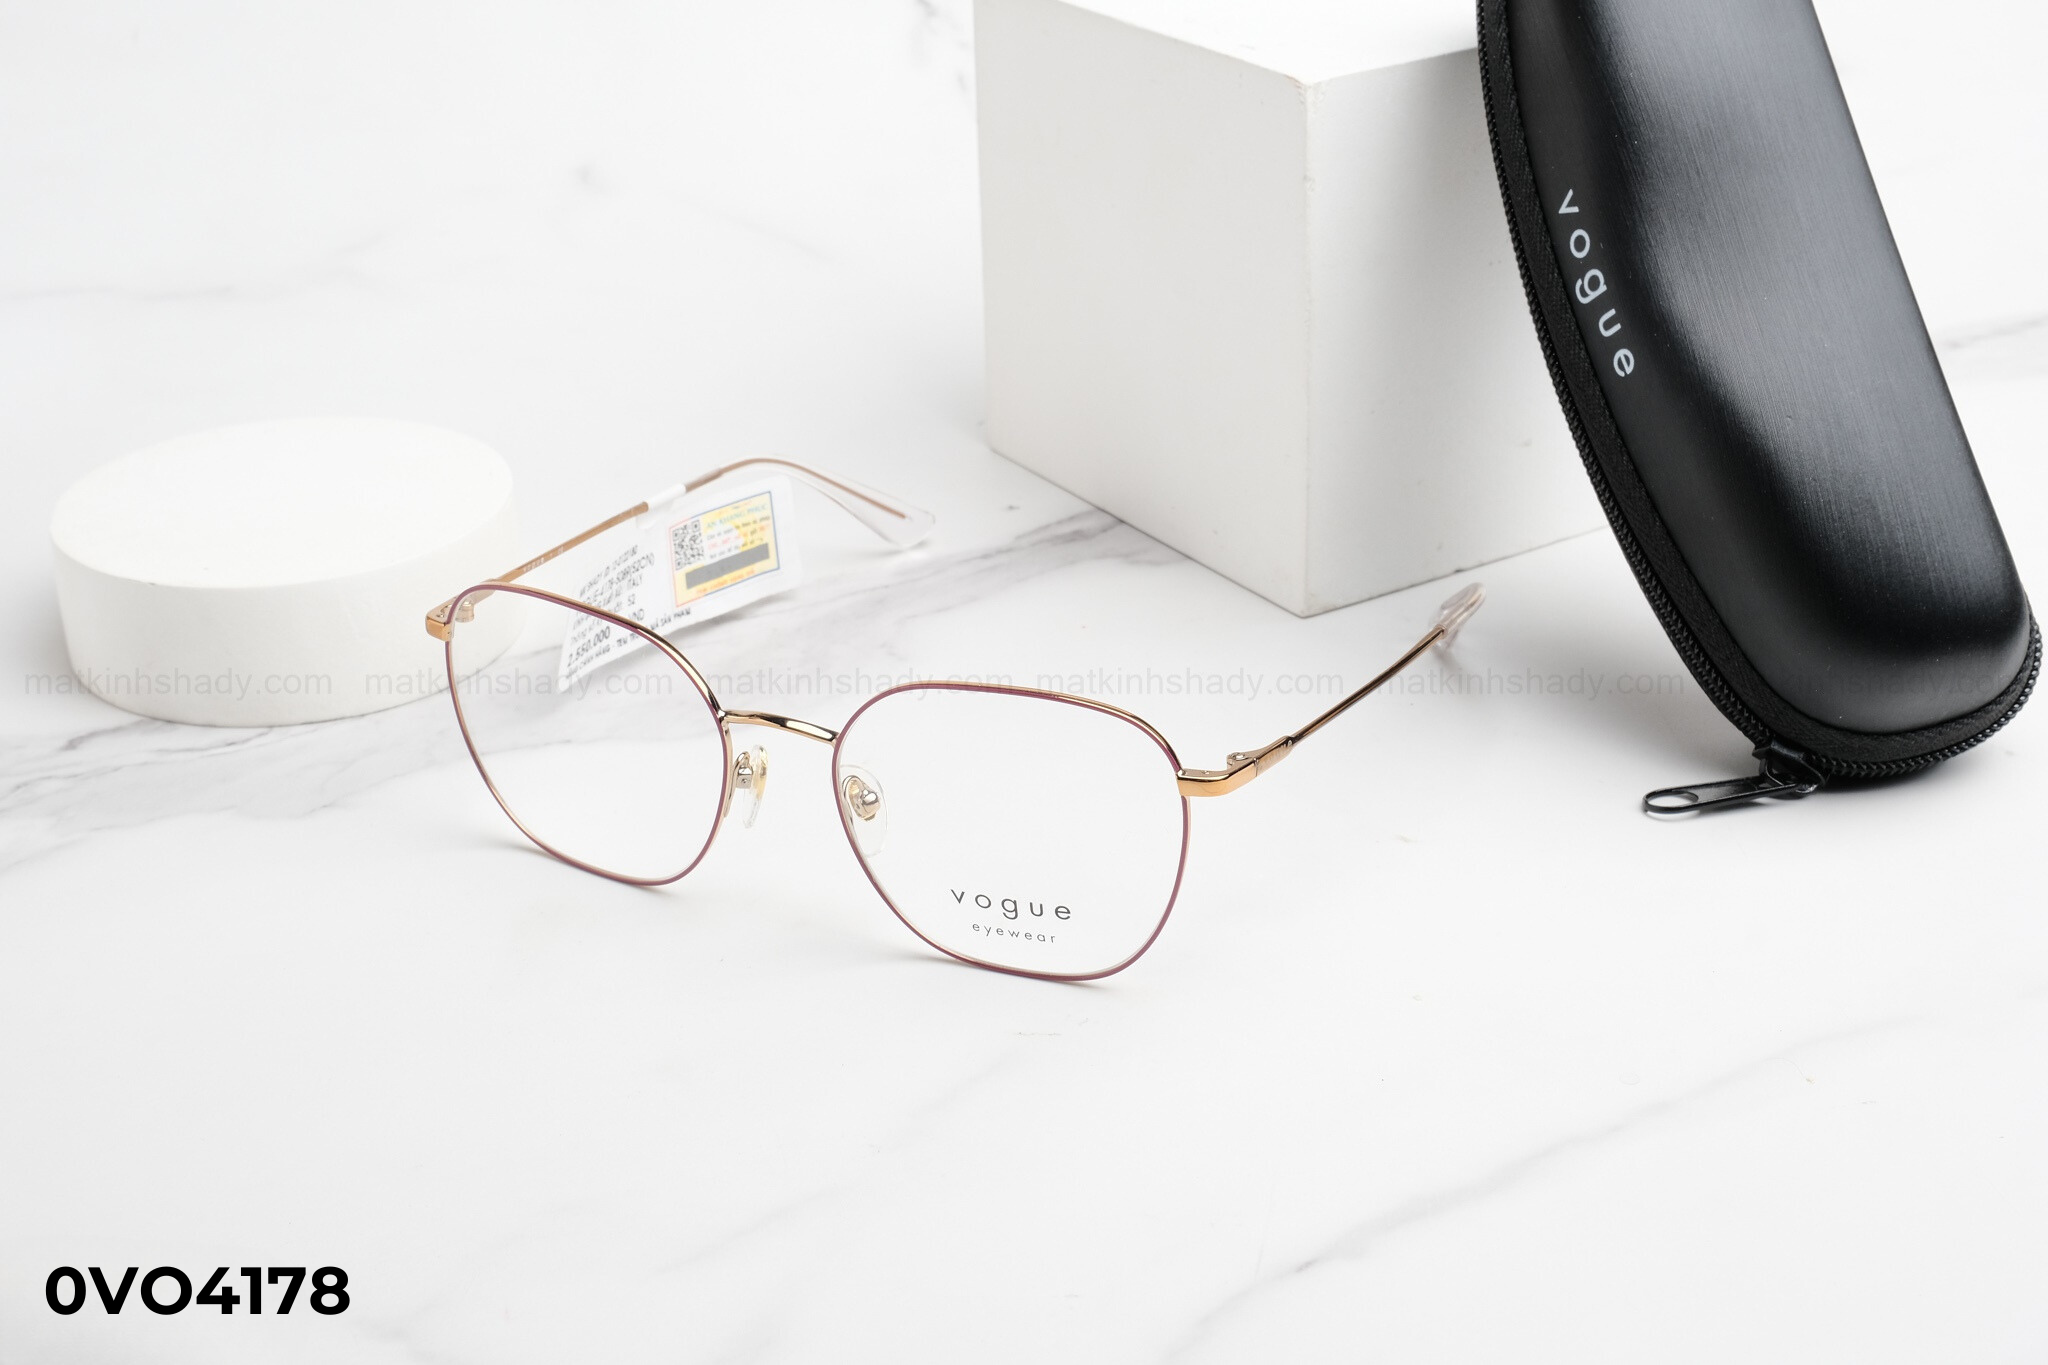  Vogue Eyewear - Glasses - 0VO4178 